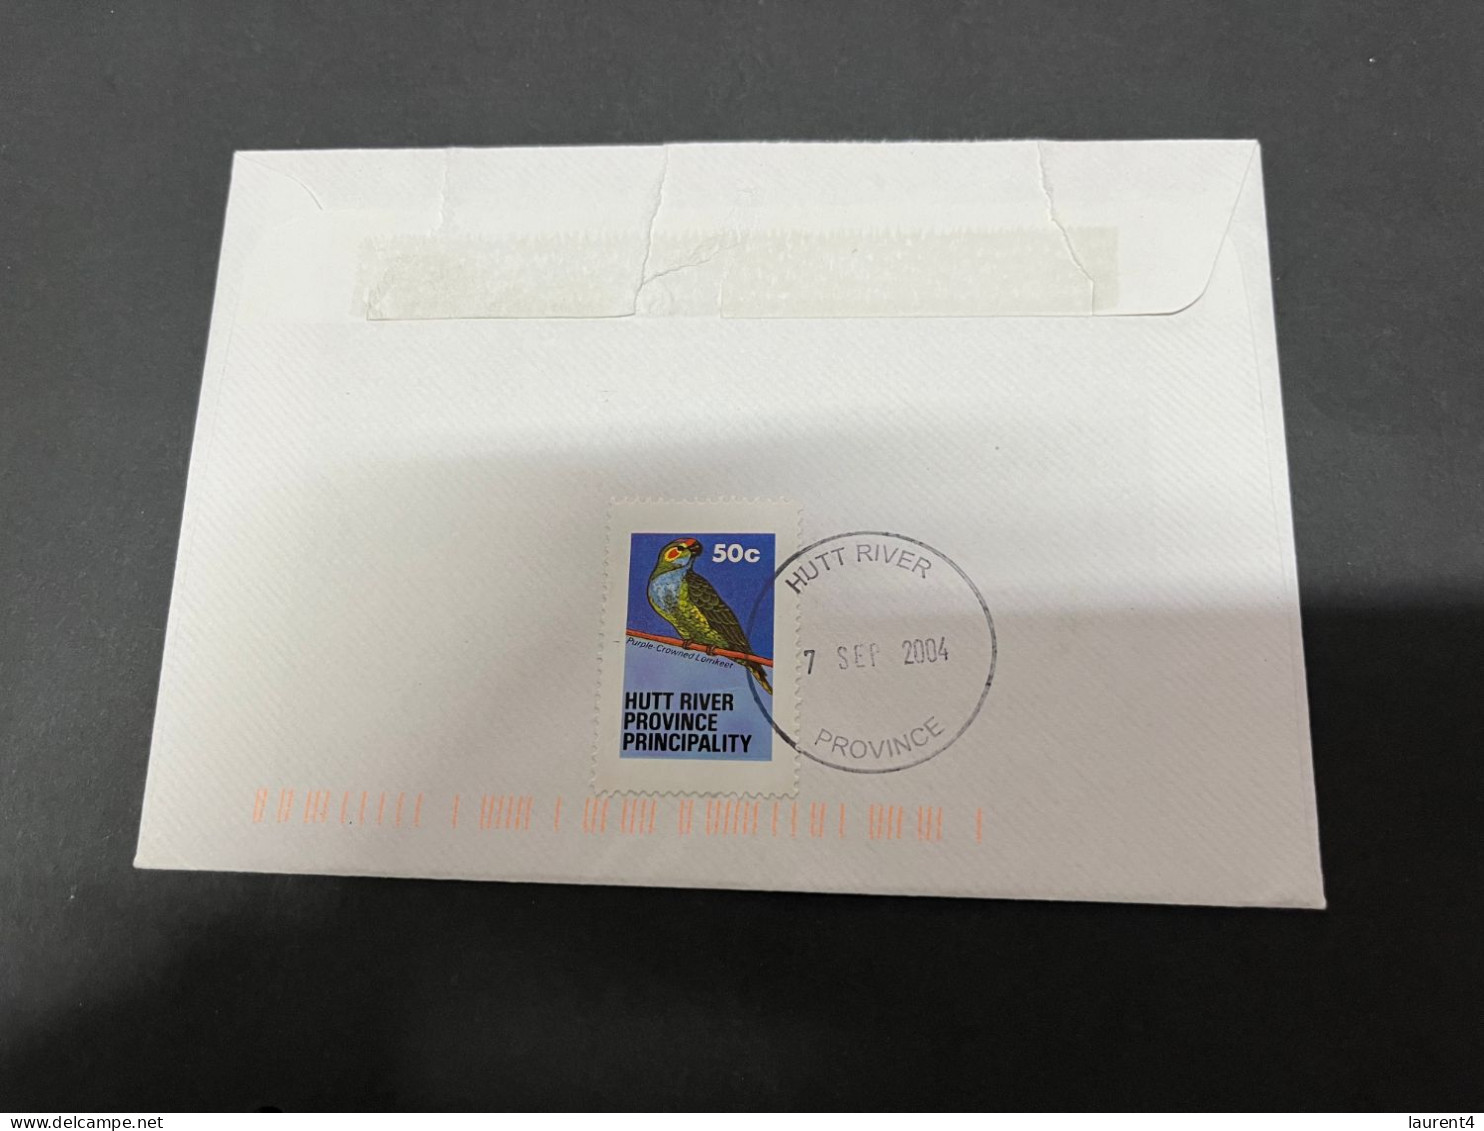 20-7-2023 (2 S 44) Australia Cover + Postcard + Blank Cover Large 18 X 27 Cm) - Hutt River Province (WA) 3 Items - Cinderellas